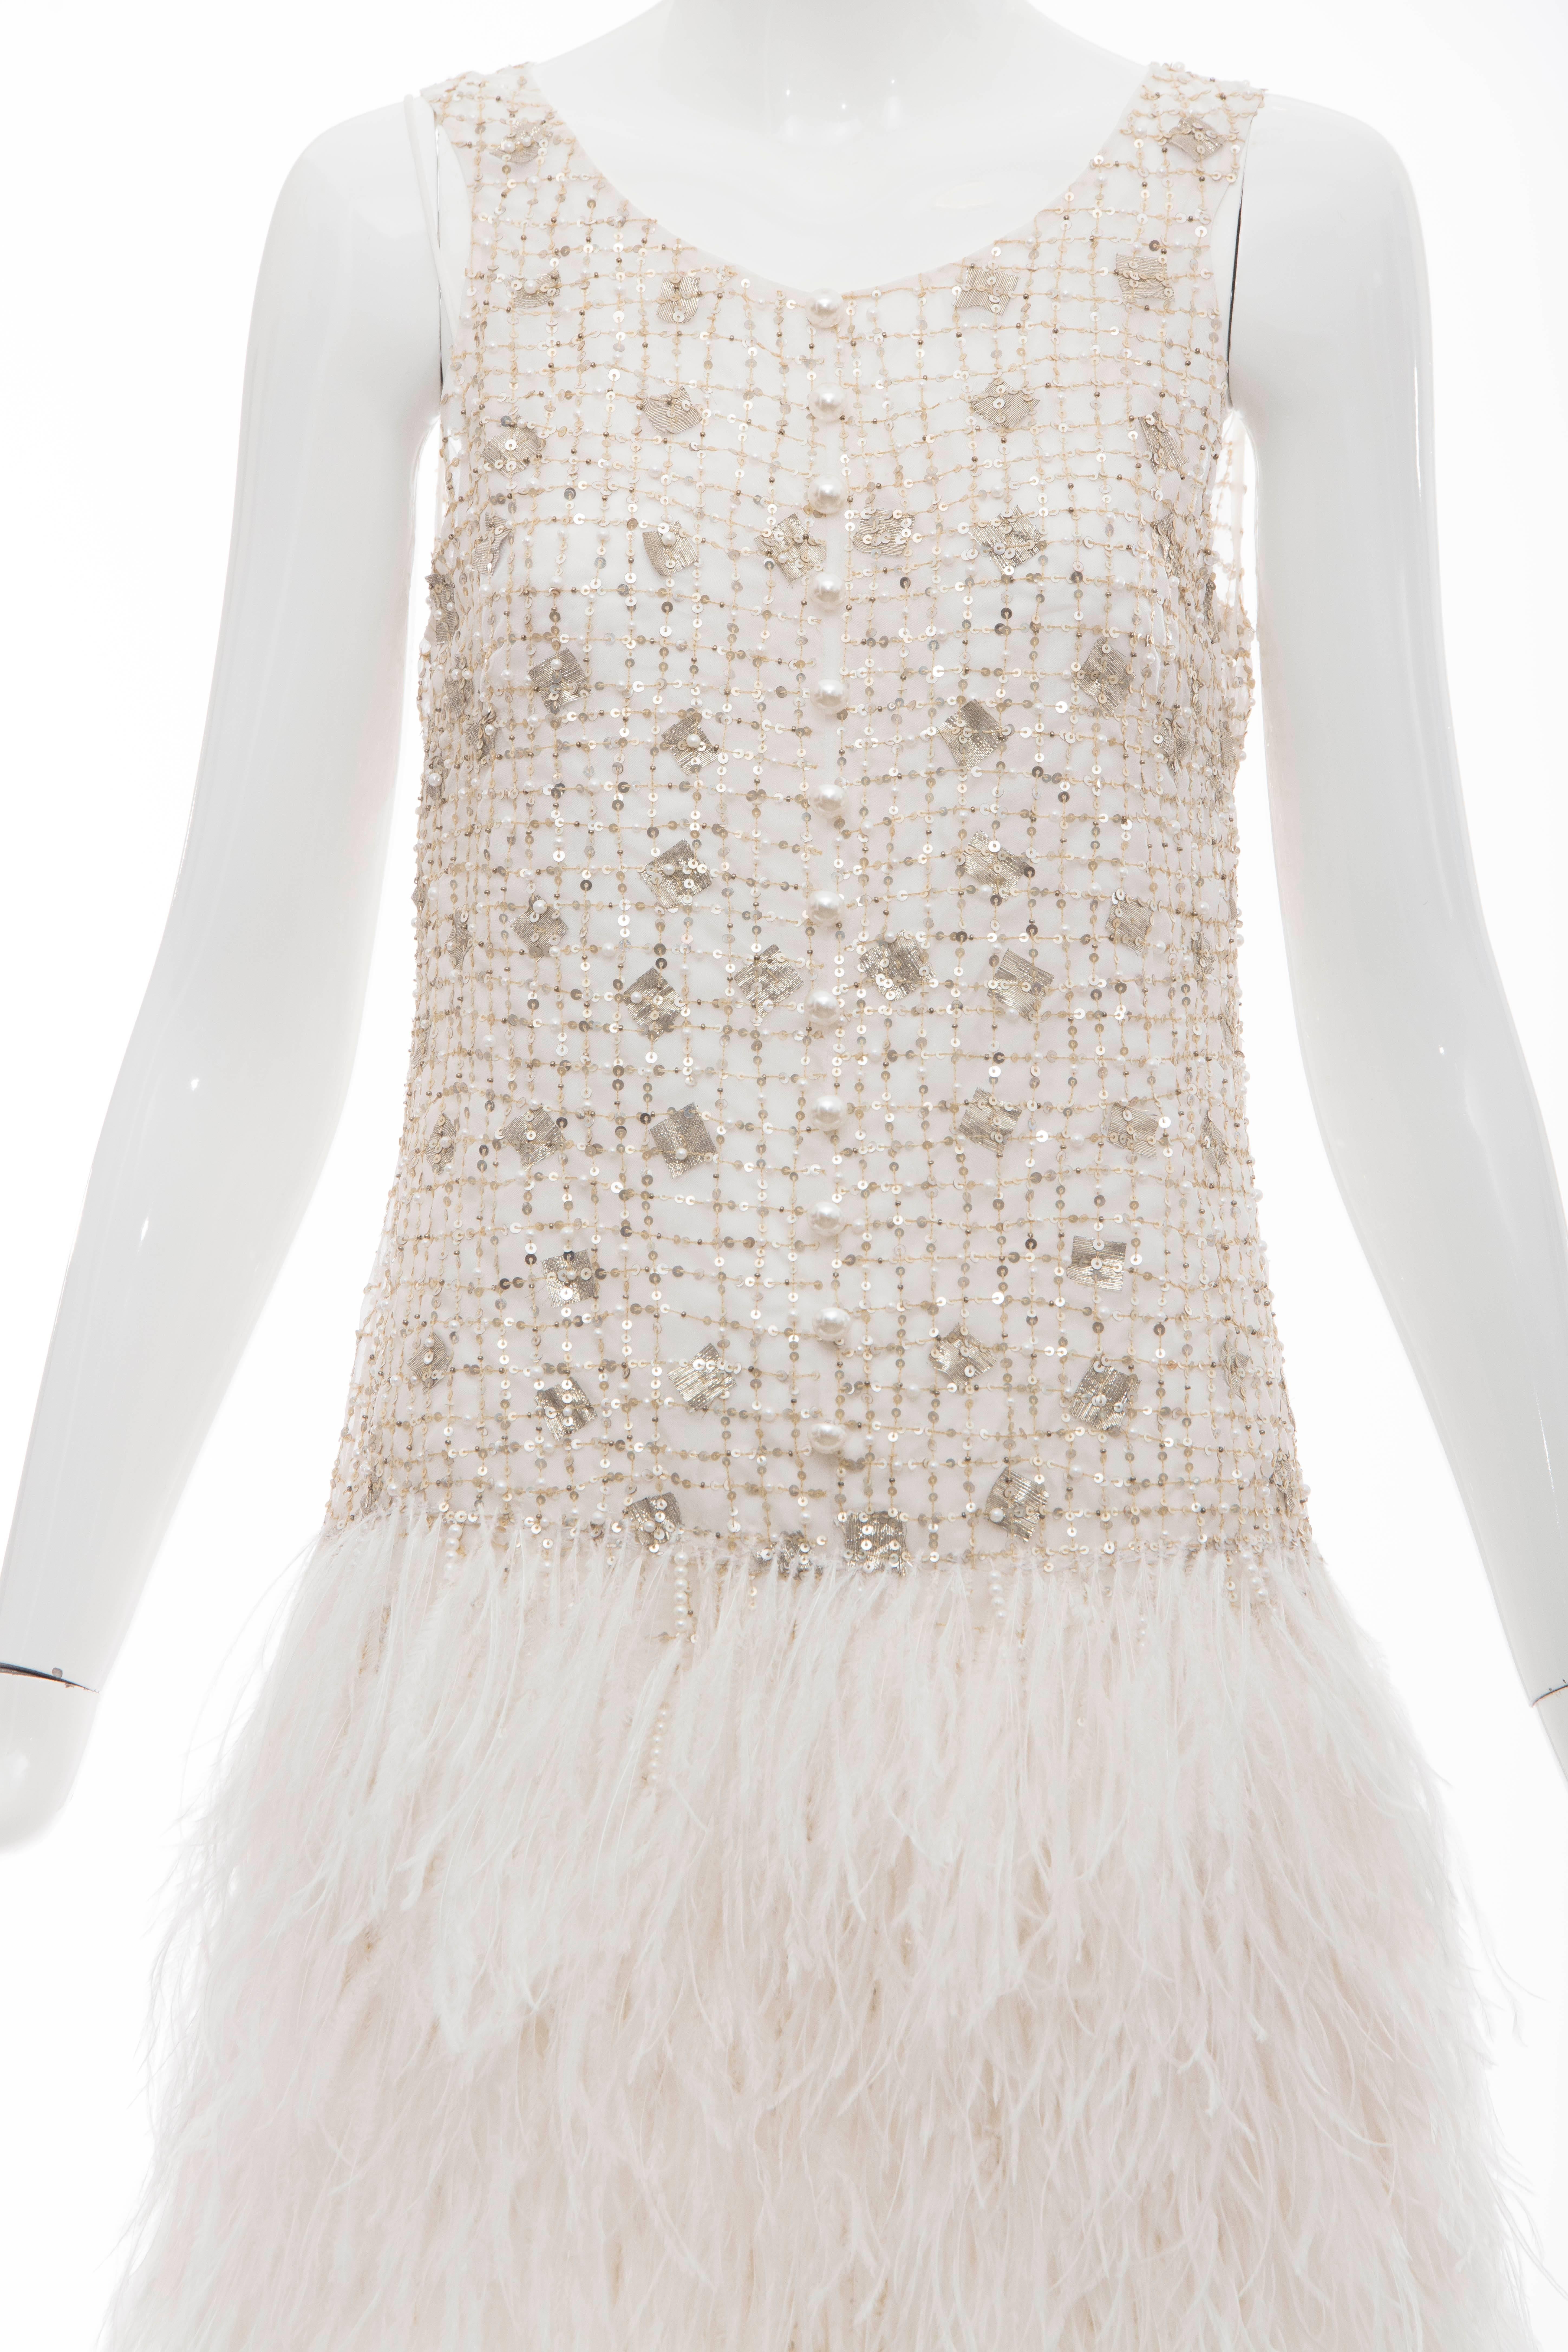 Women's Oscar de la Renta Silk Metallic Sequin Pearl Evening Dress With Ostrich Feathers